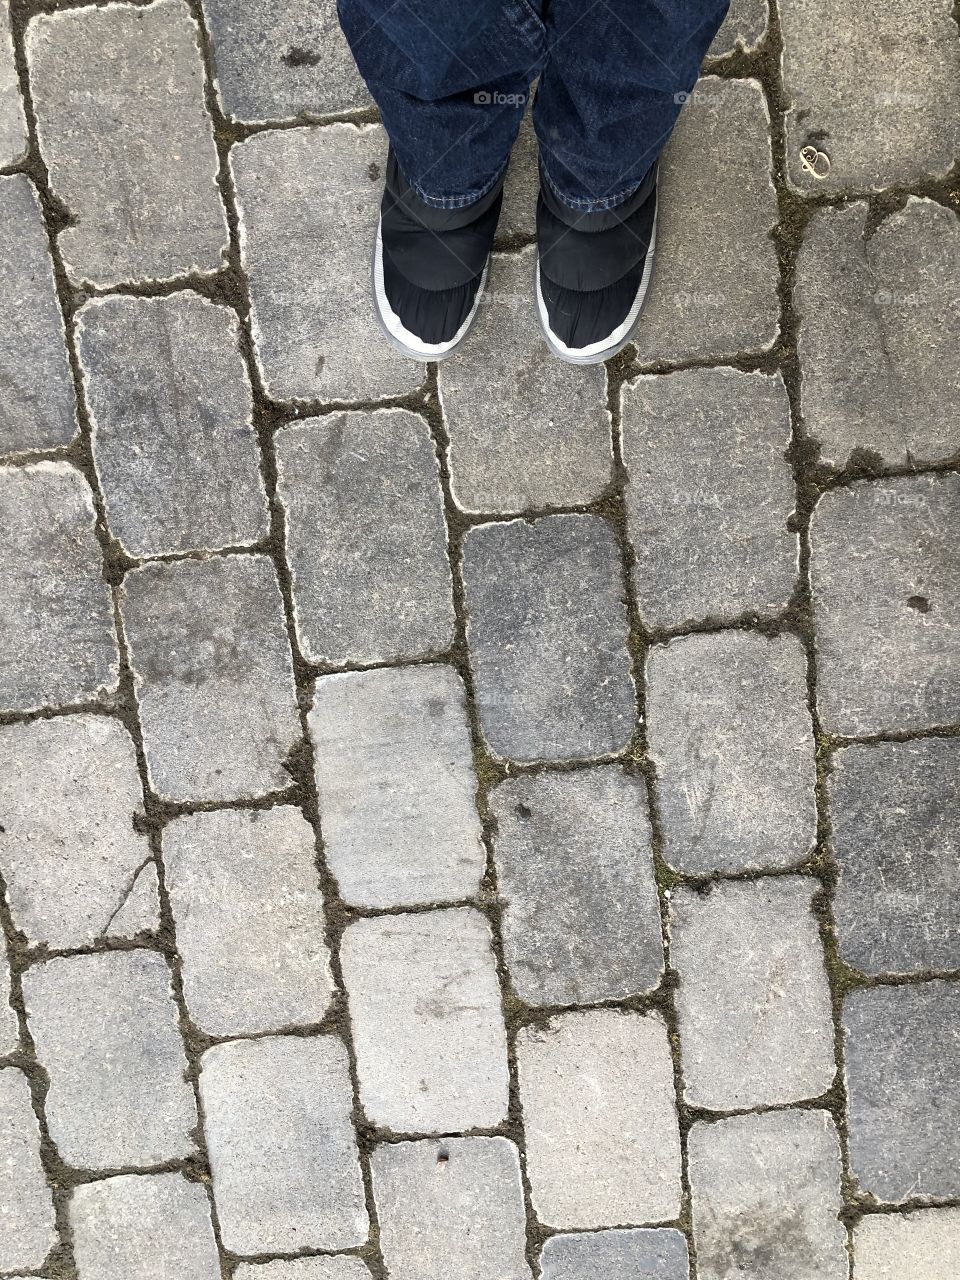 Boots on cobblestone pavement